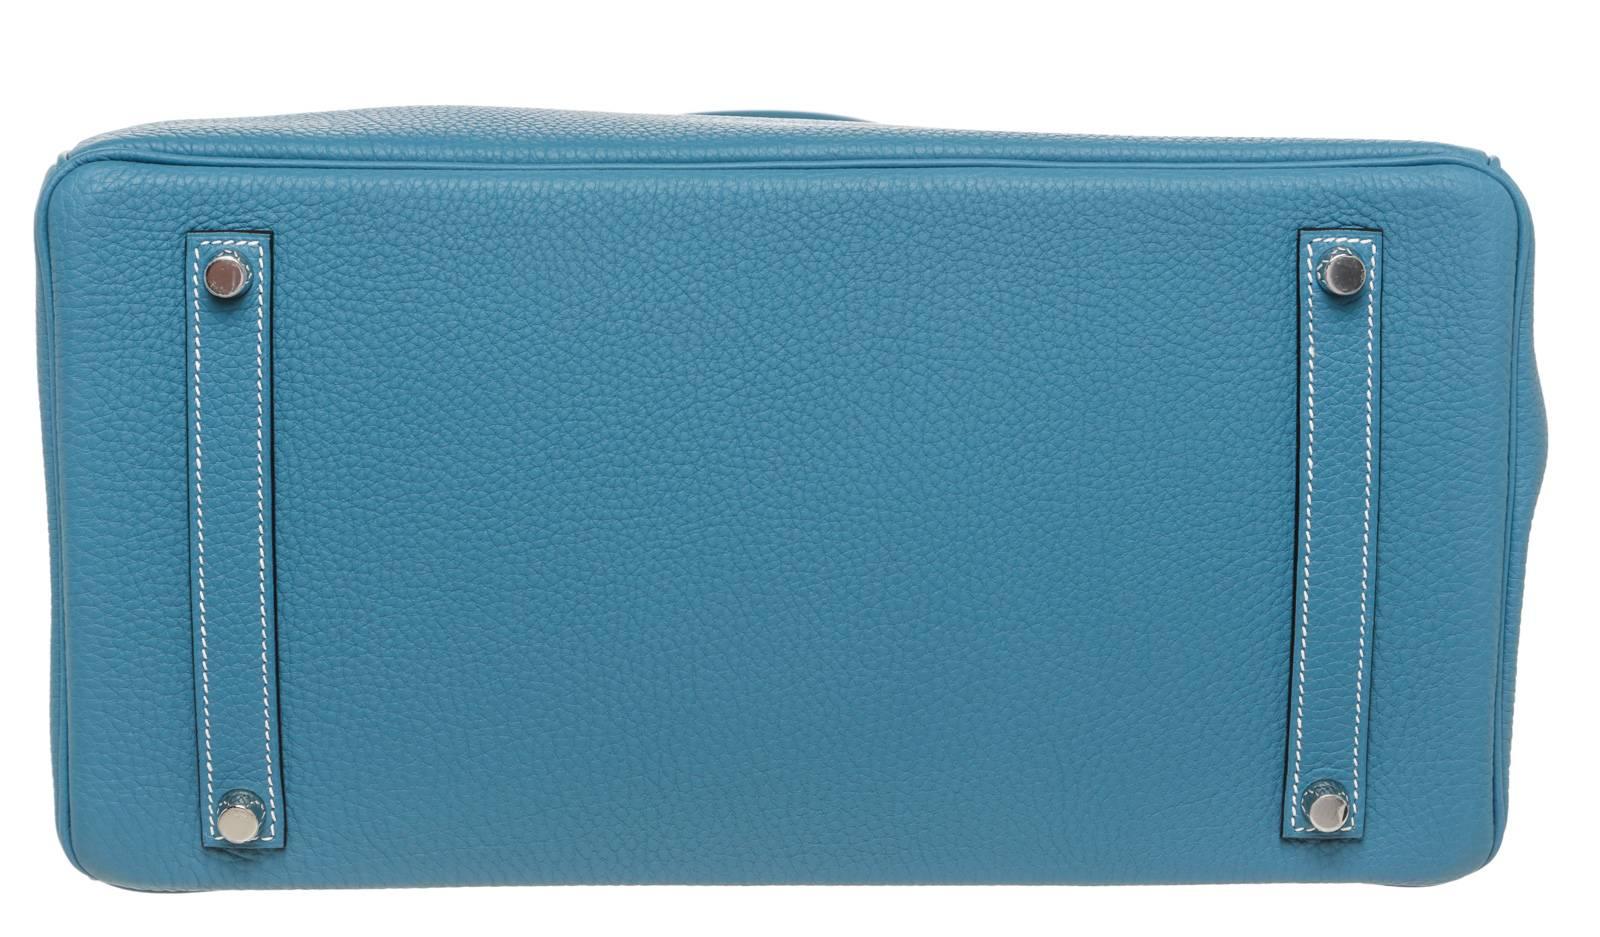 Hermes Bleu Jean Togo Leather Birkin 35cm Handbag SHW In Good Condition For Sale In Corona Del Mar, CA